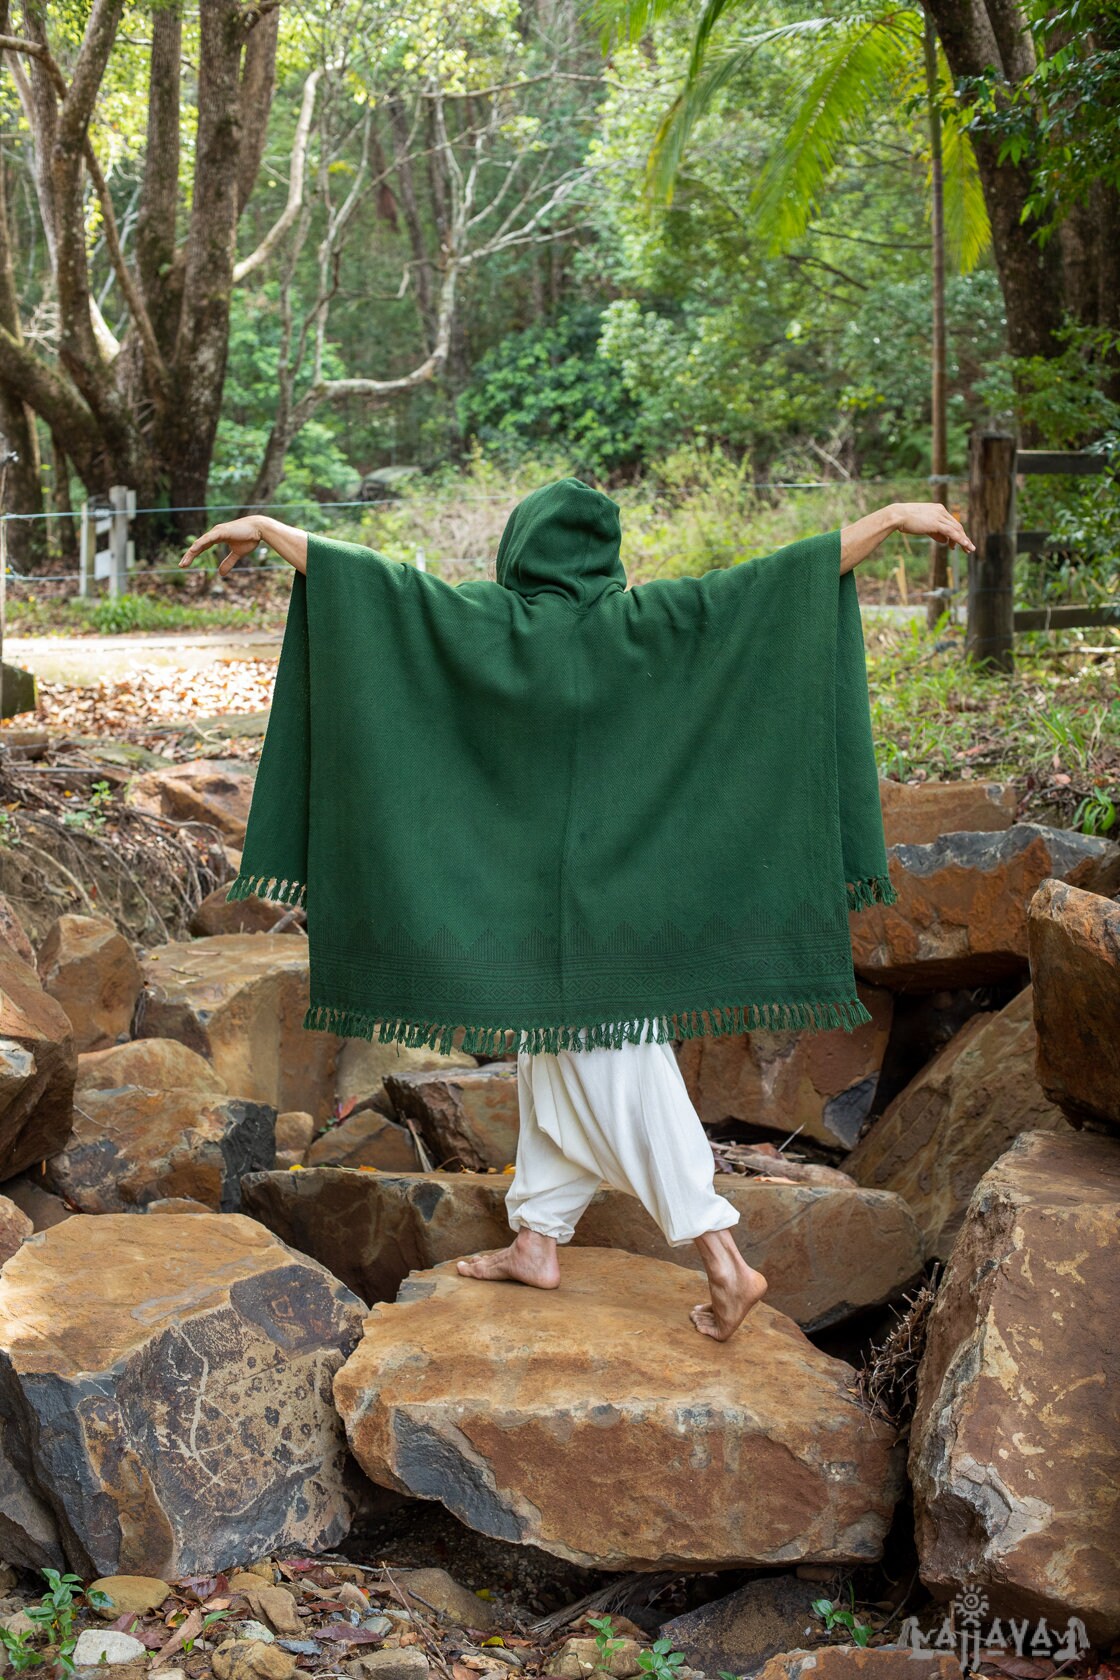 ANAGAMI Dark Green Hooded Kimono Cape Poncho Robe Block Printed Natural Dyed Ceremony Ritual Shaman Tribal Alchemy Sacred Shawl Wrap AJJAYA